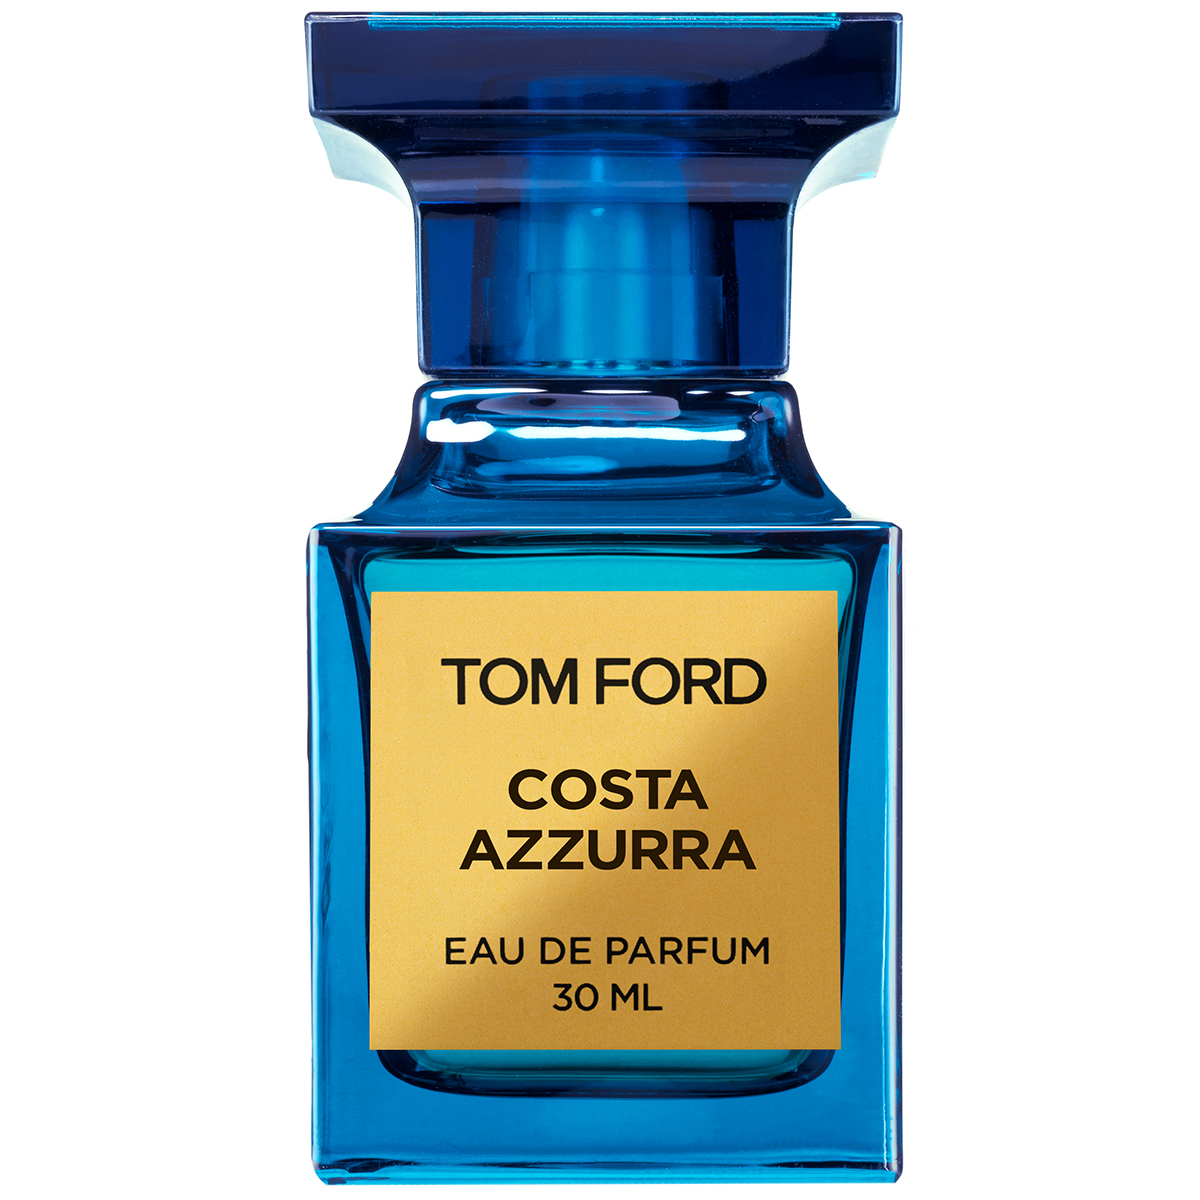 Costa Azzurra Eau de Parfum 30 ml Tom Ford EdP